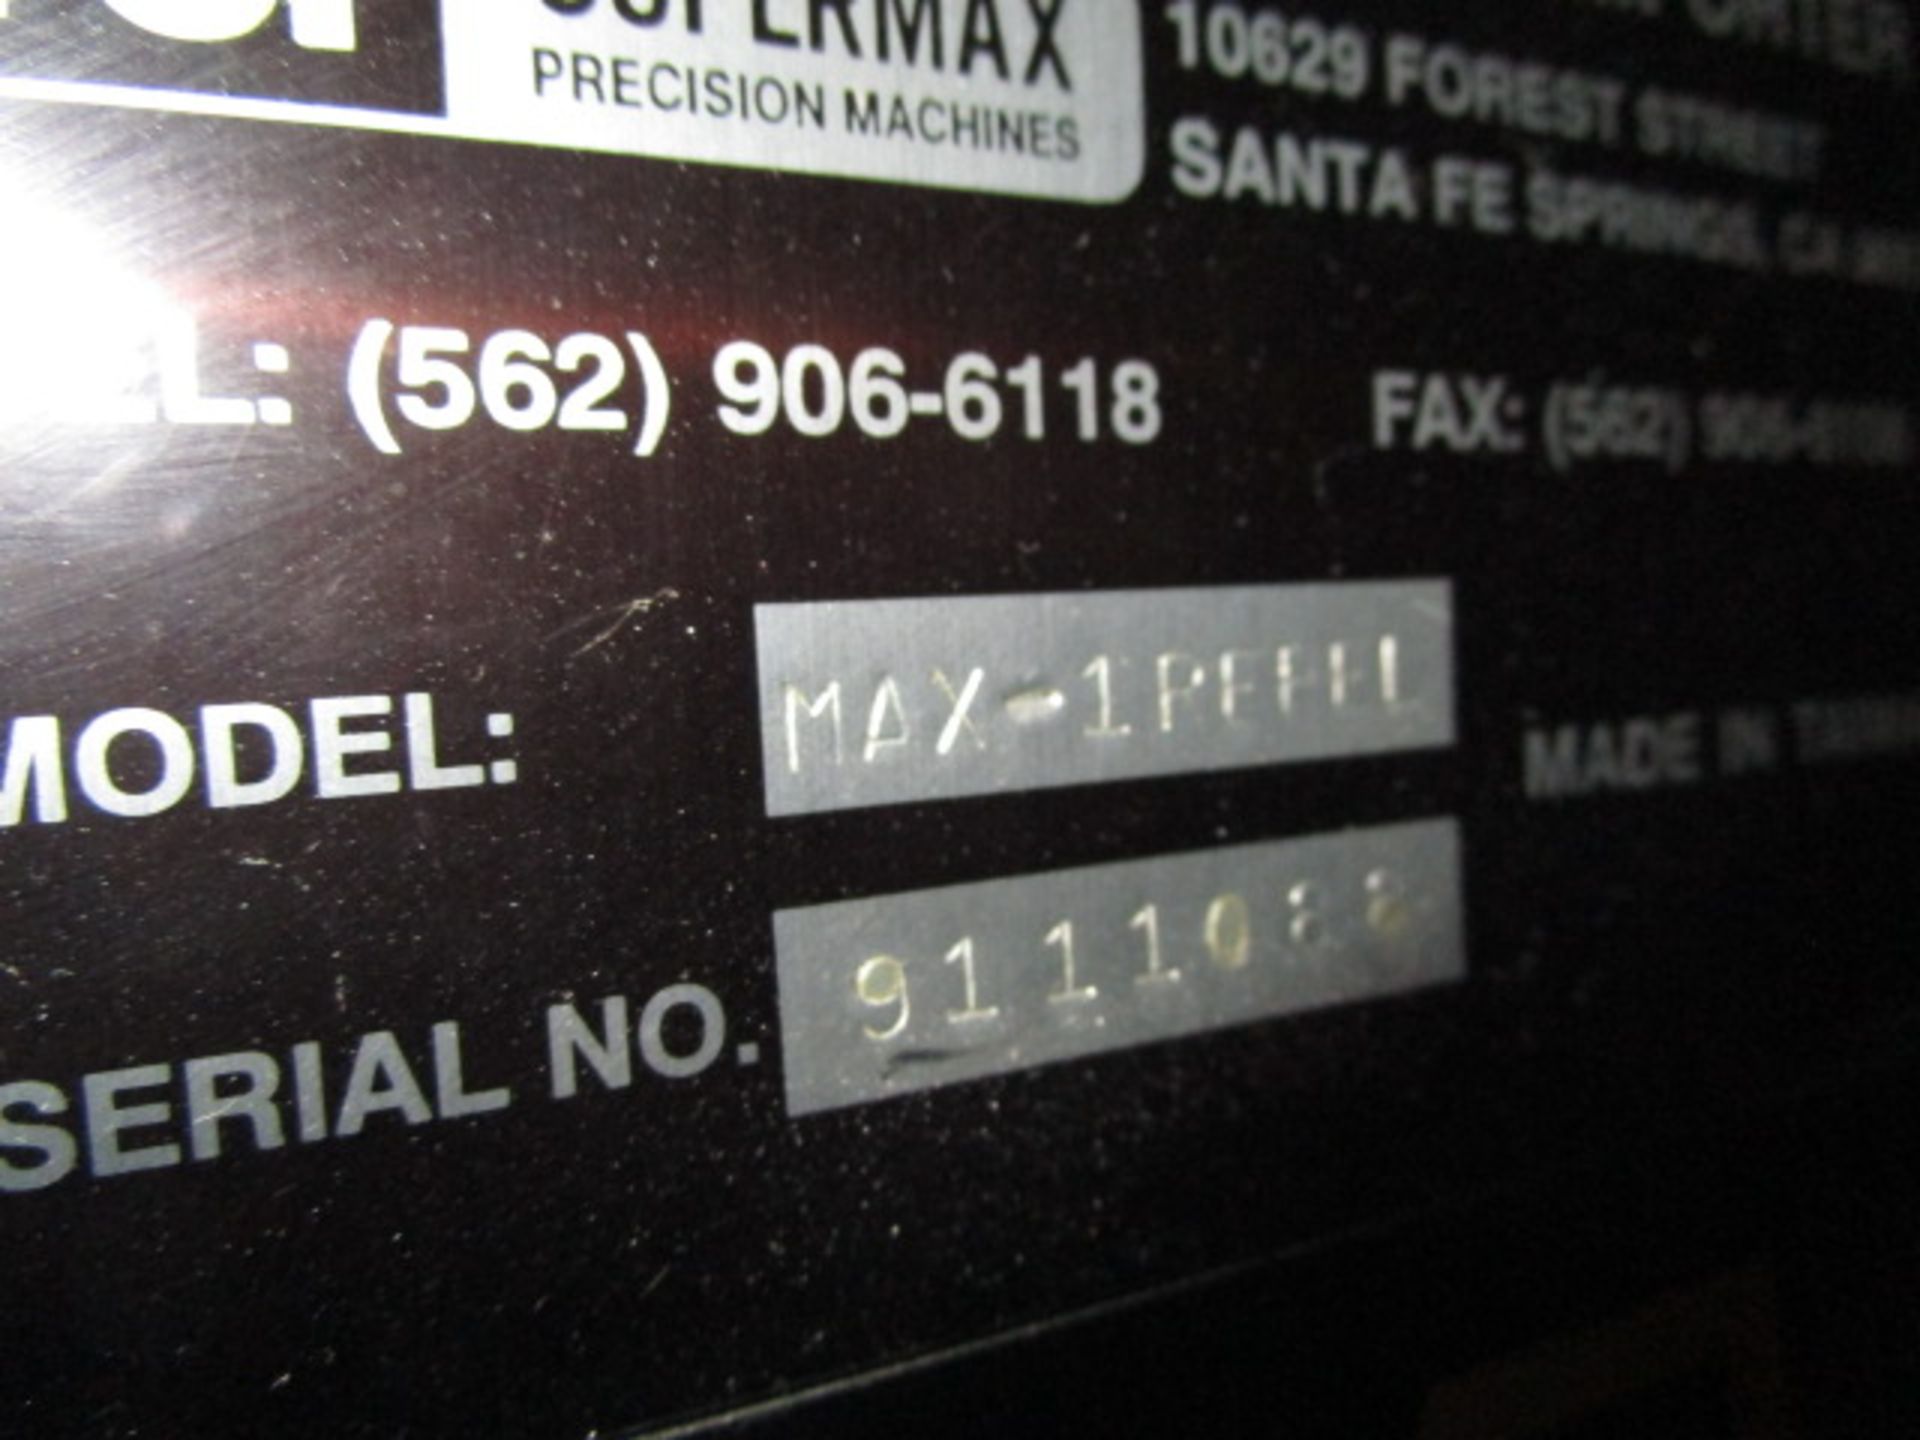 SuperMax Max-1 Rebel CNC Vertical Machining Center, Model MAX-1 REBEL, Serial Number 9111082 - Image 18 of 20